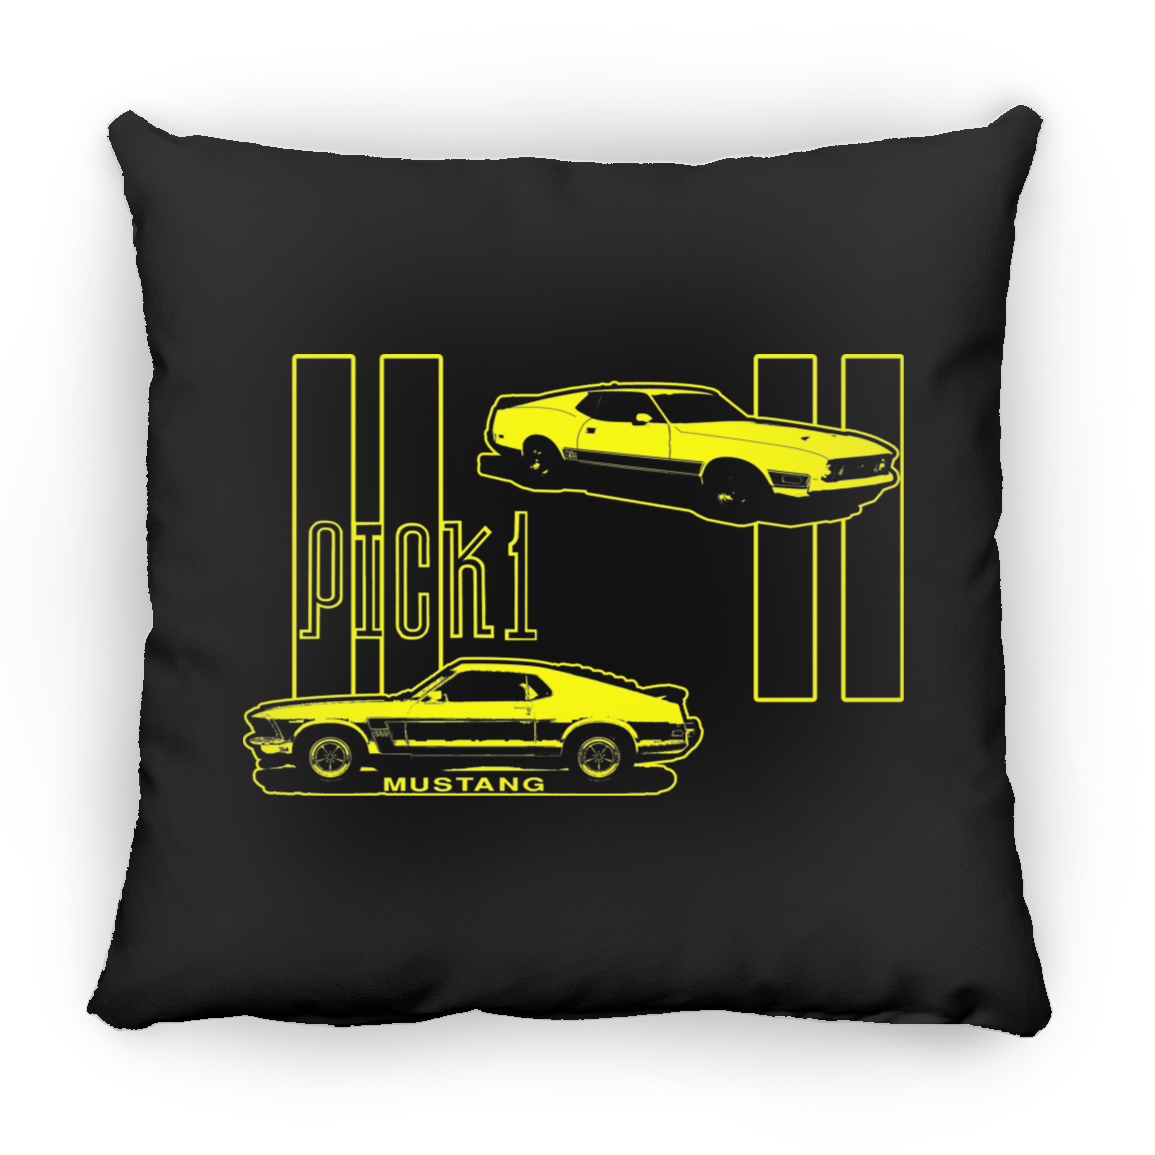 ArtichokeUSA Custom Design. Pick 1 Mustang. Mach 1 Mustang Parody. Cars. Square Pillow 18x18